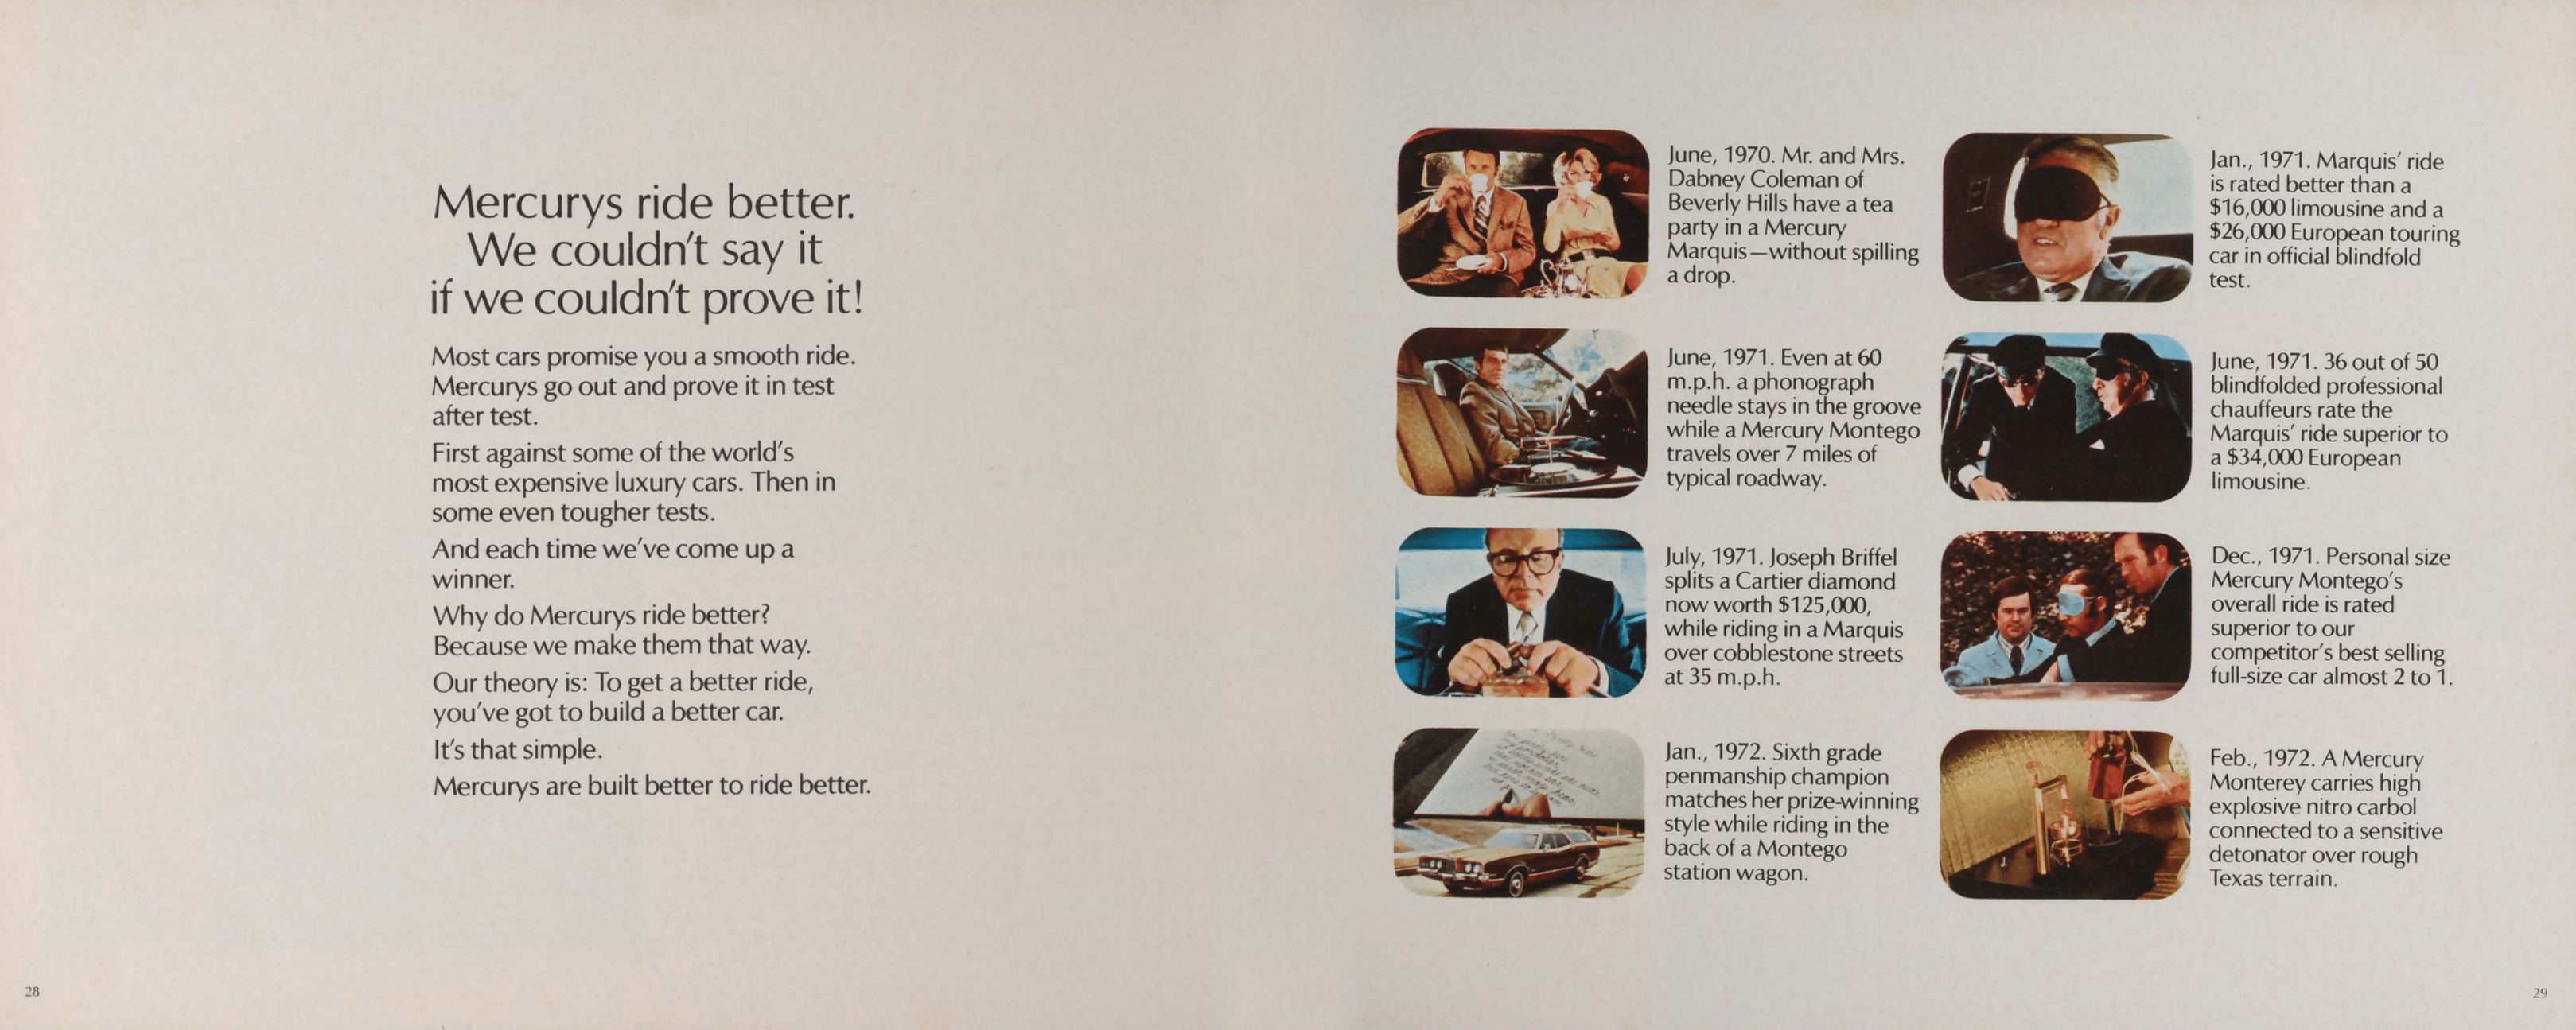 1973 Lincoln Mercury Full Line Brochure 28-29